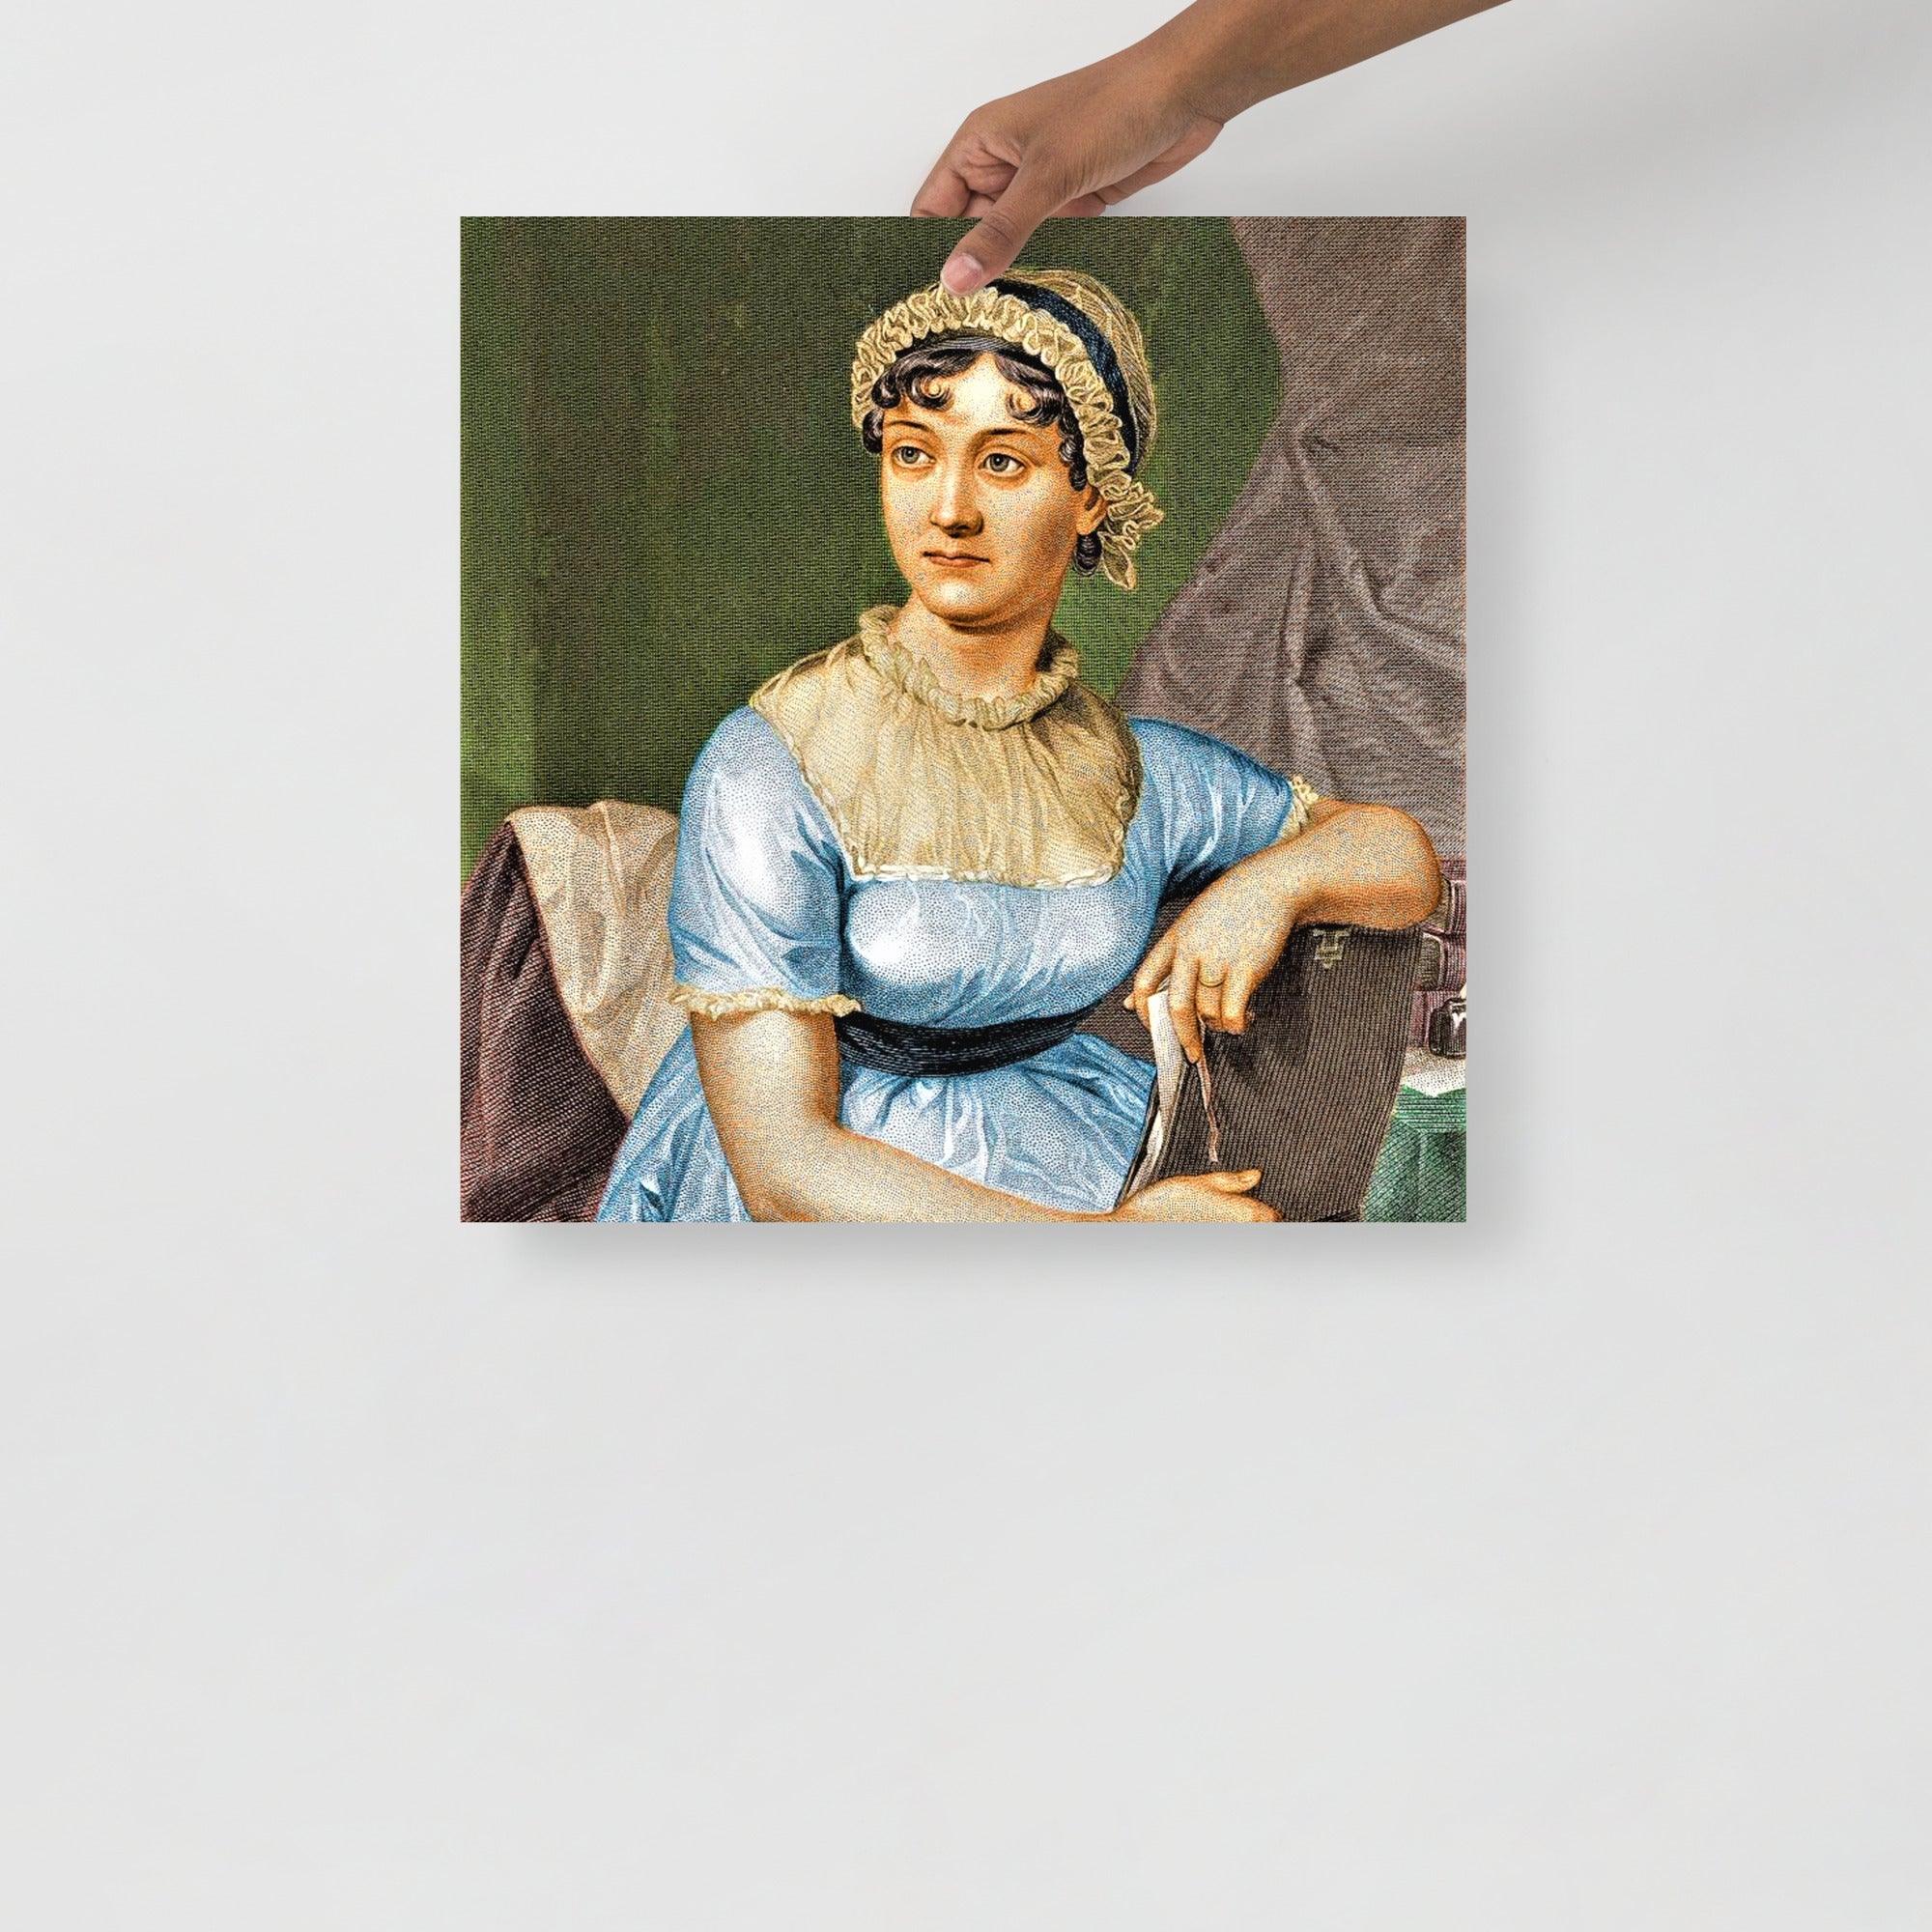 A Jane Austen poster on a plain backdrop in size 18x18”.